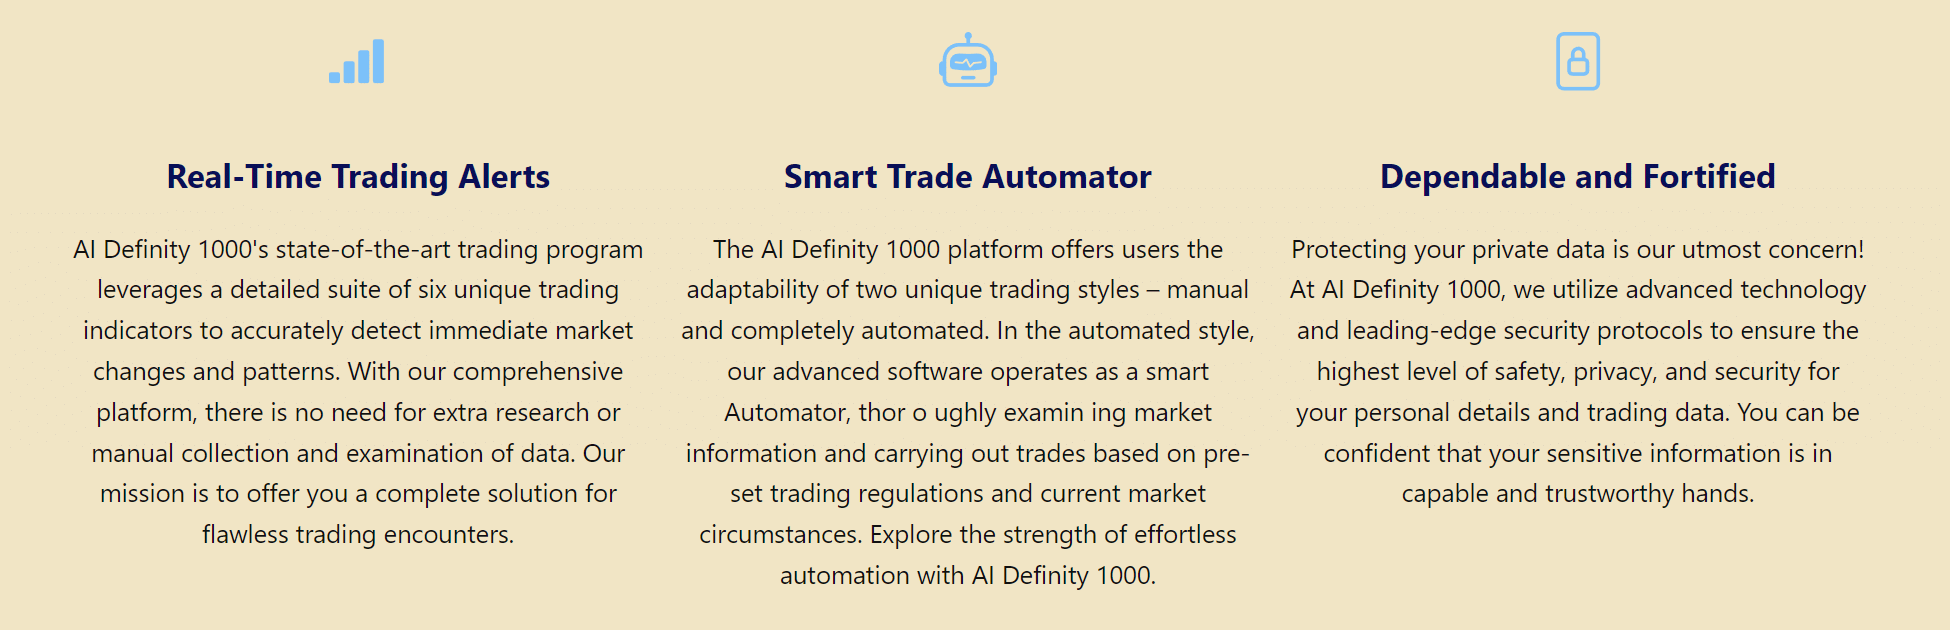 AI Definity 1000 trading platform